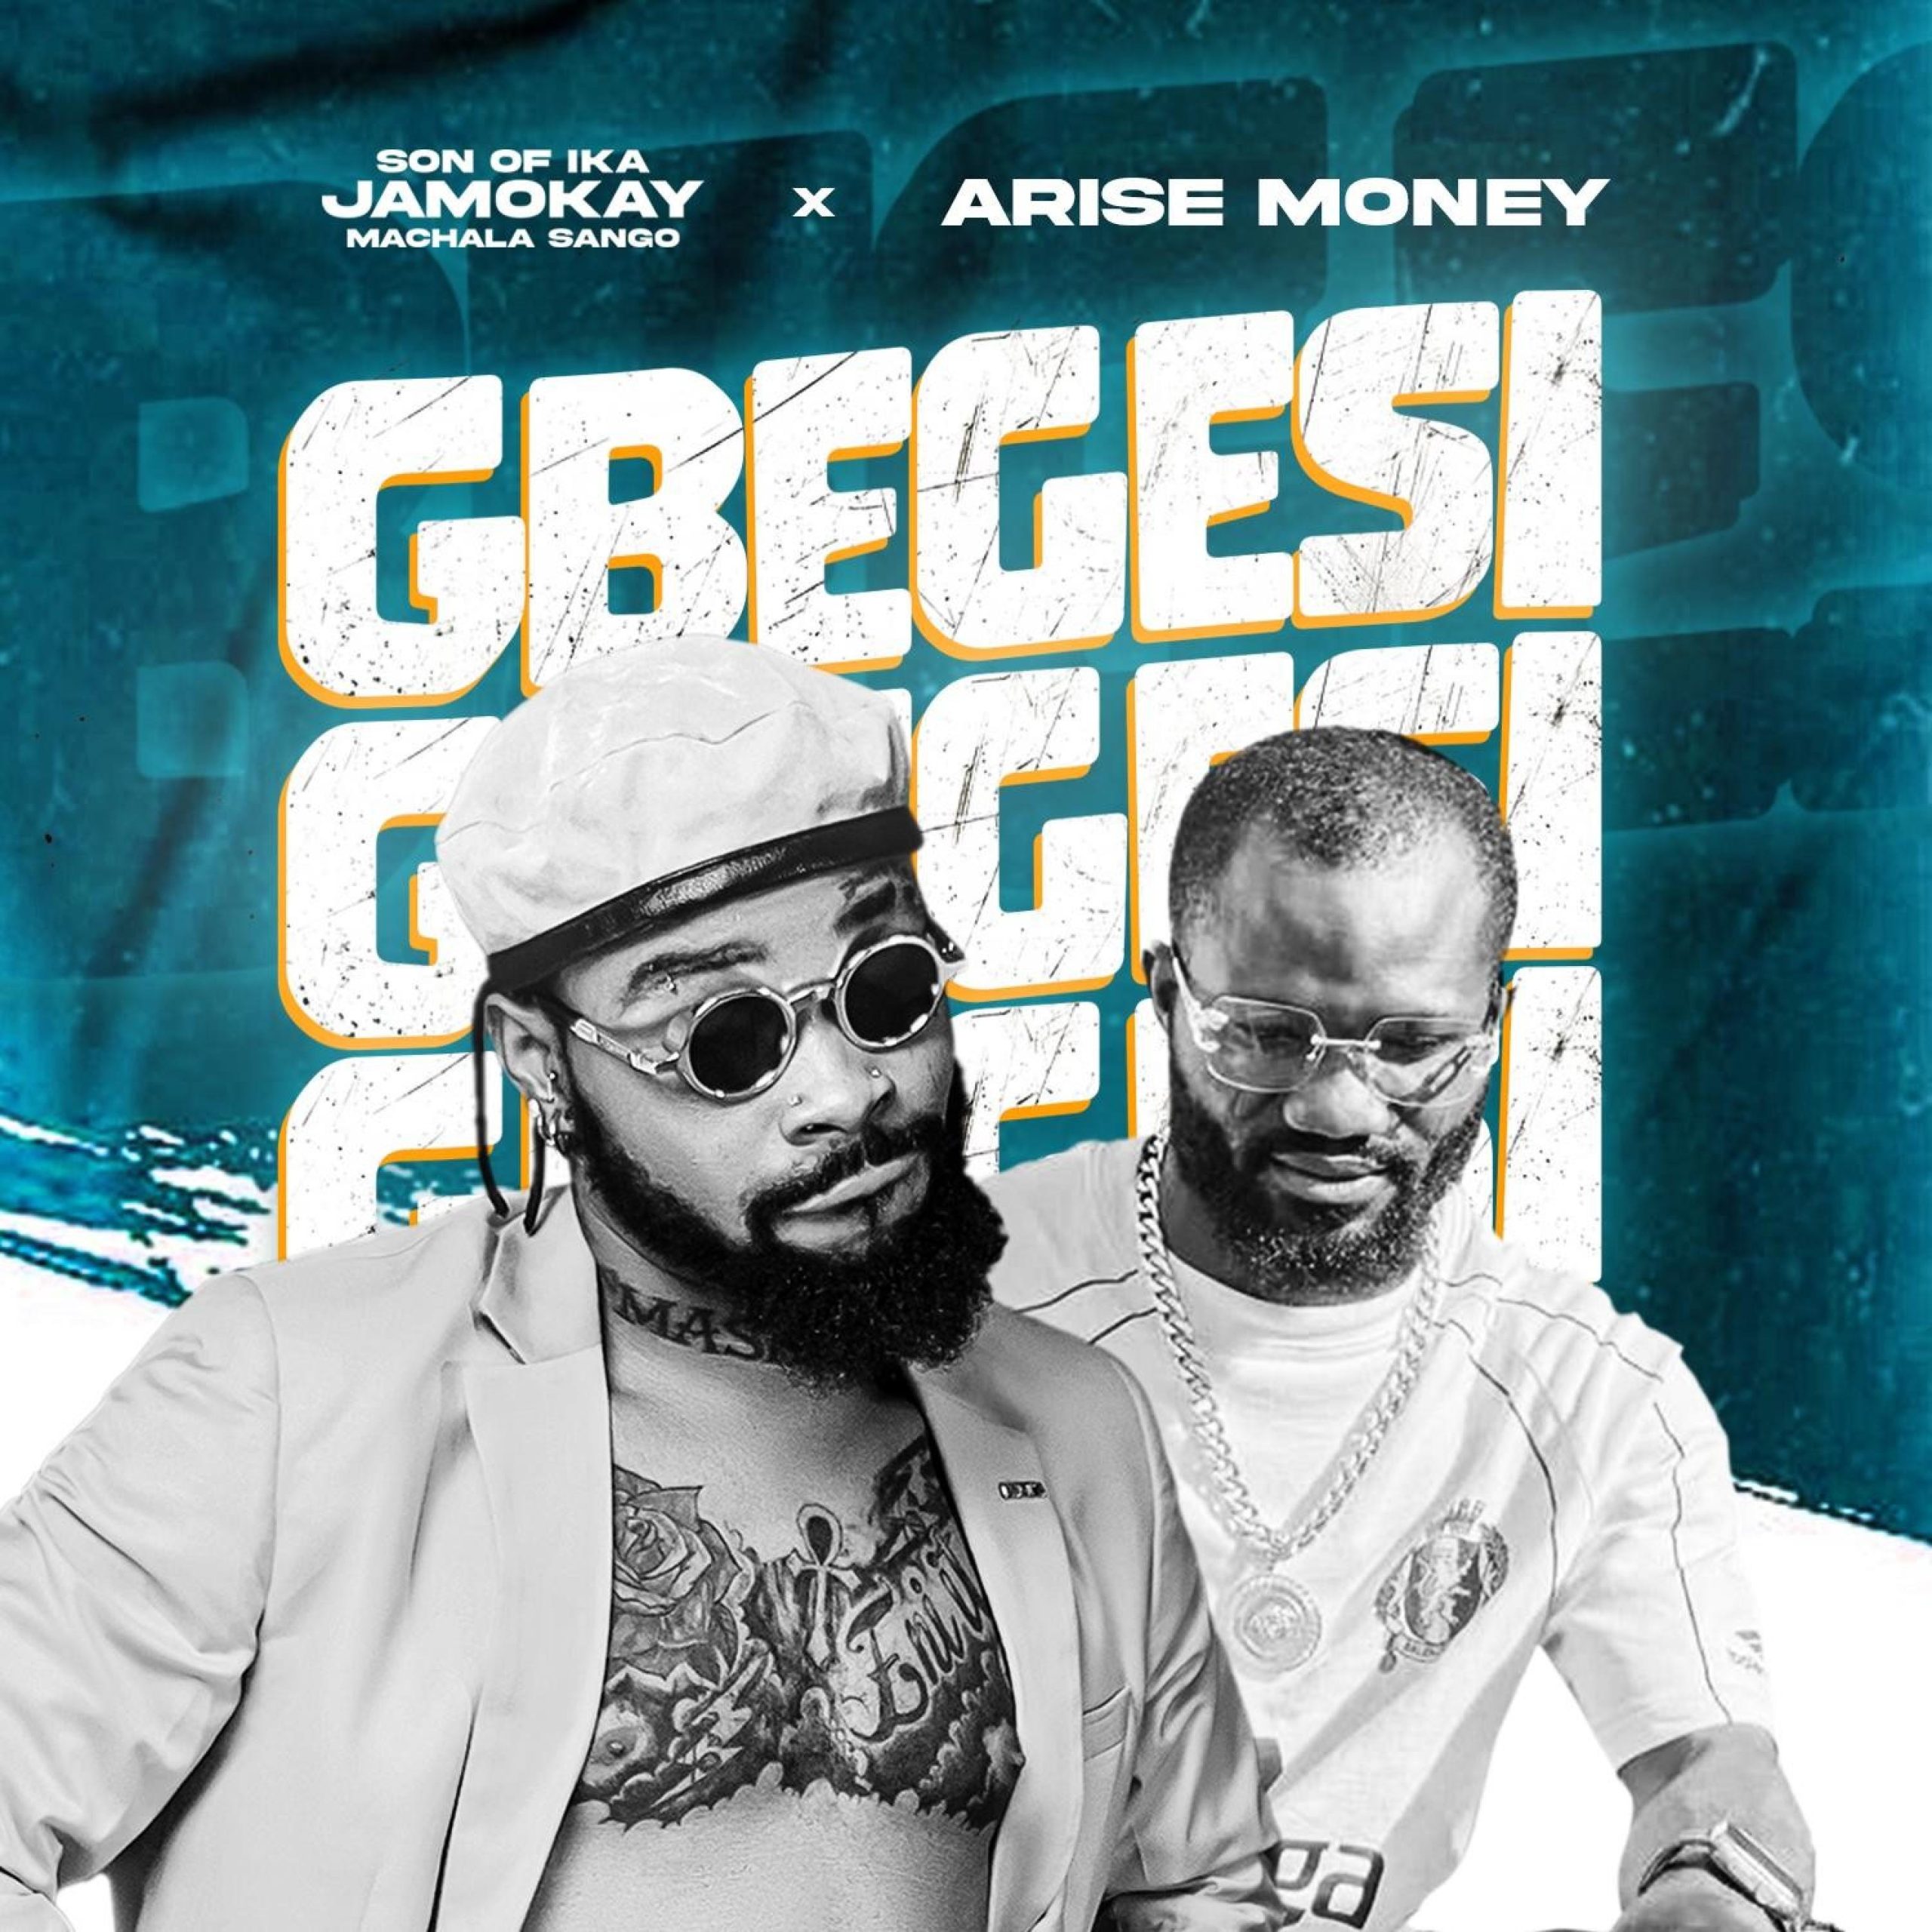 Son of Ika Jamokay Gbegesi ft. Arise Money scaled